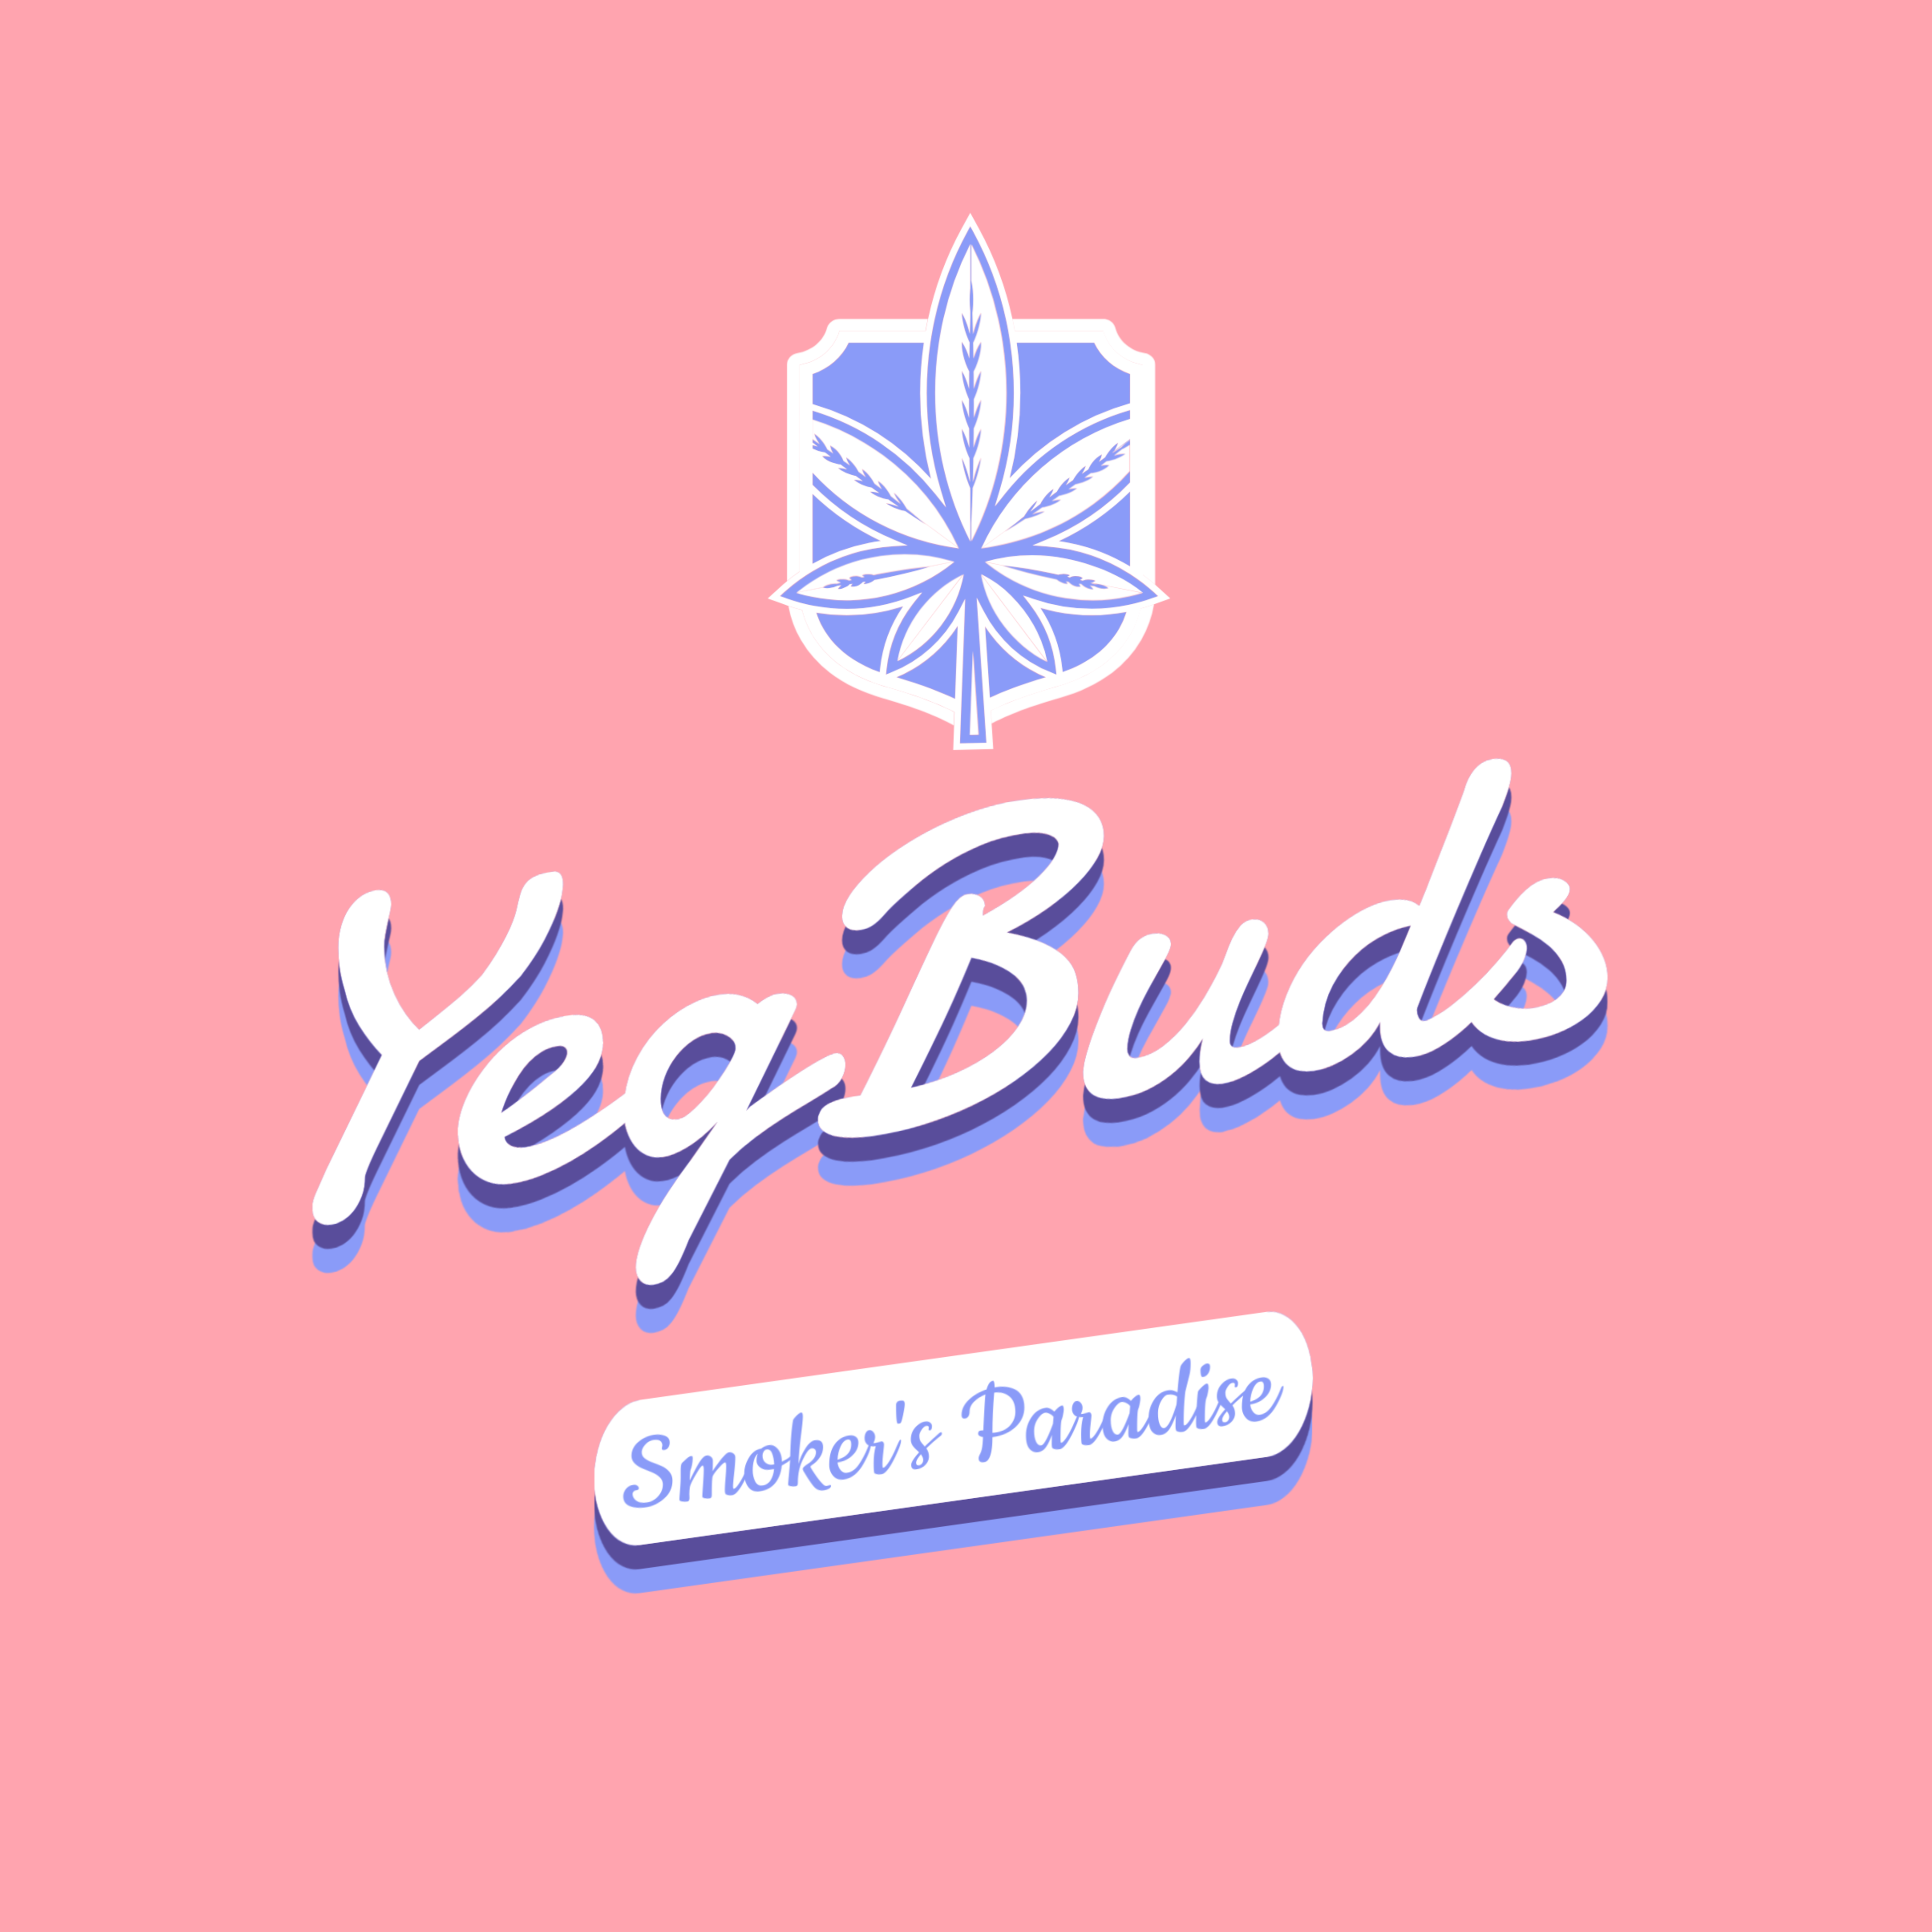 (c) Yegbuds.co